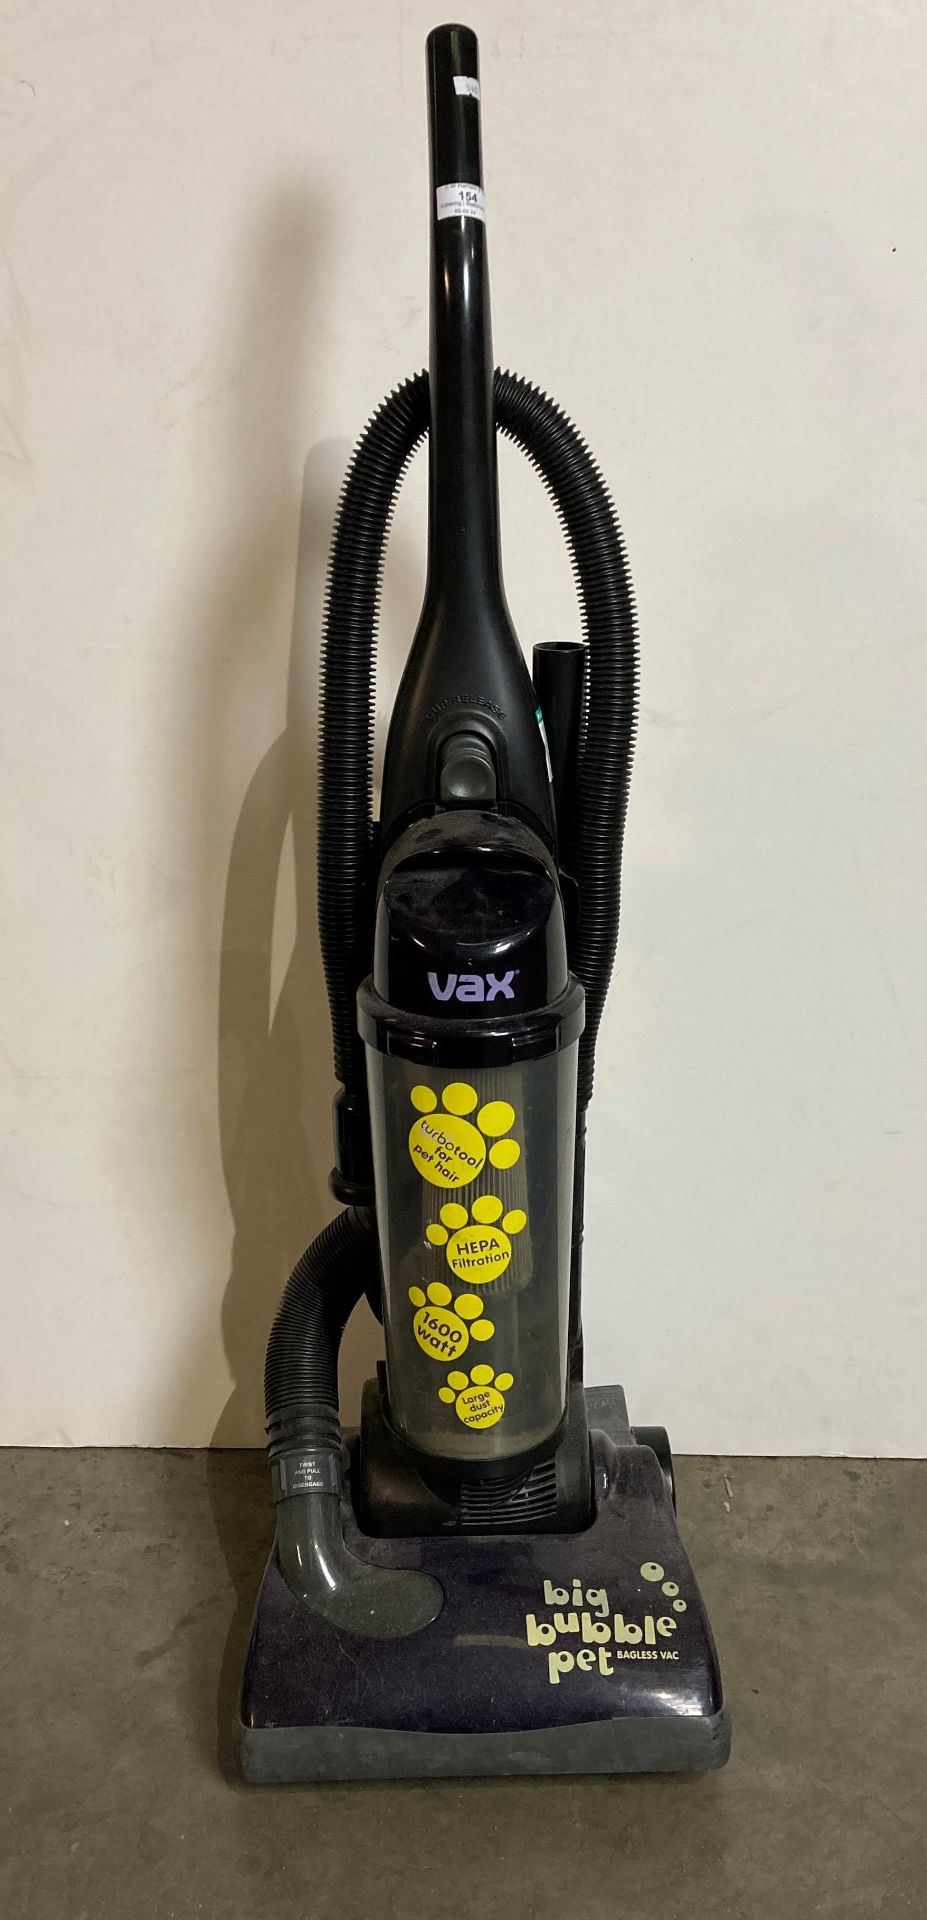 Vax Big Bubble upright bagless vacuum cleaner (saleroom location: PO)